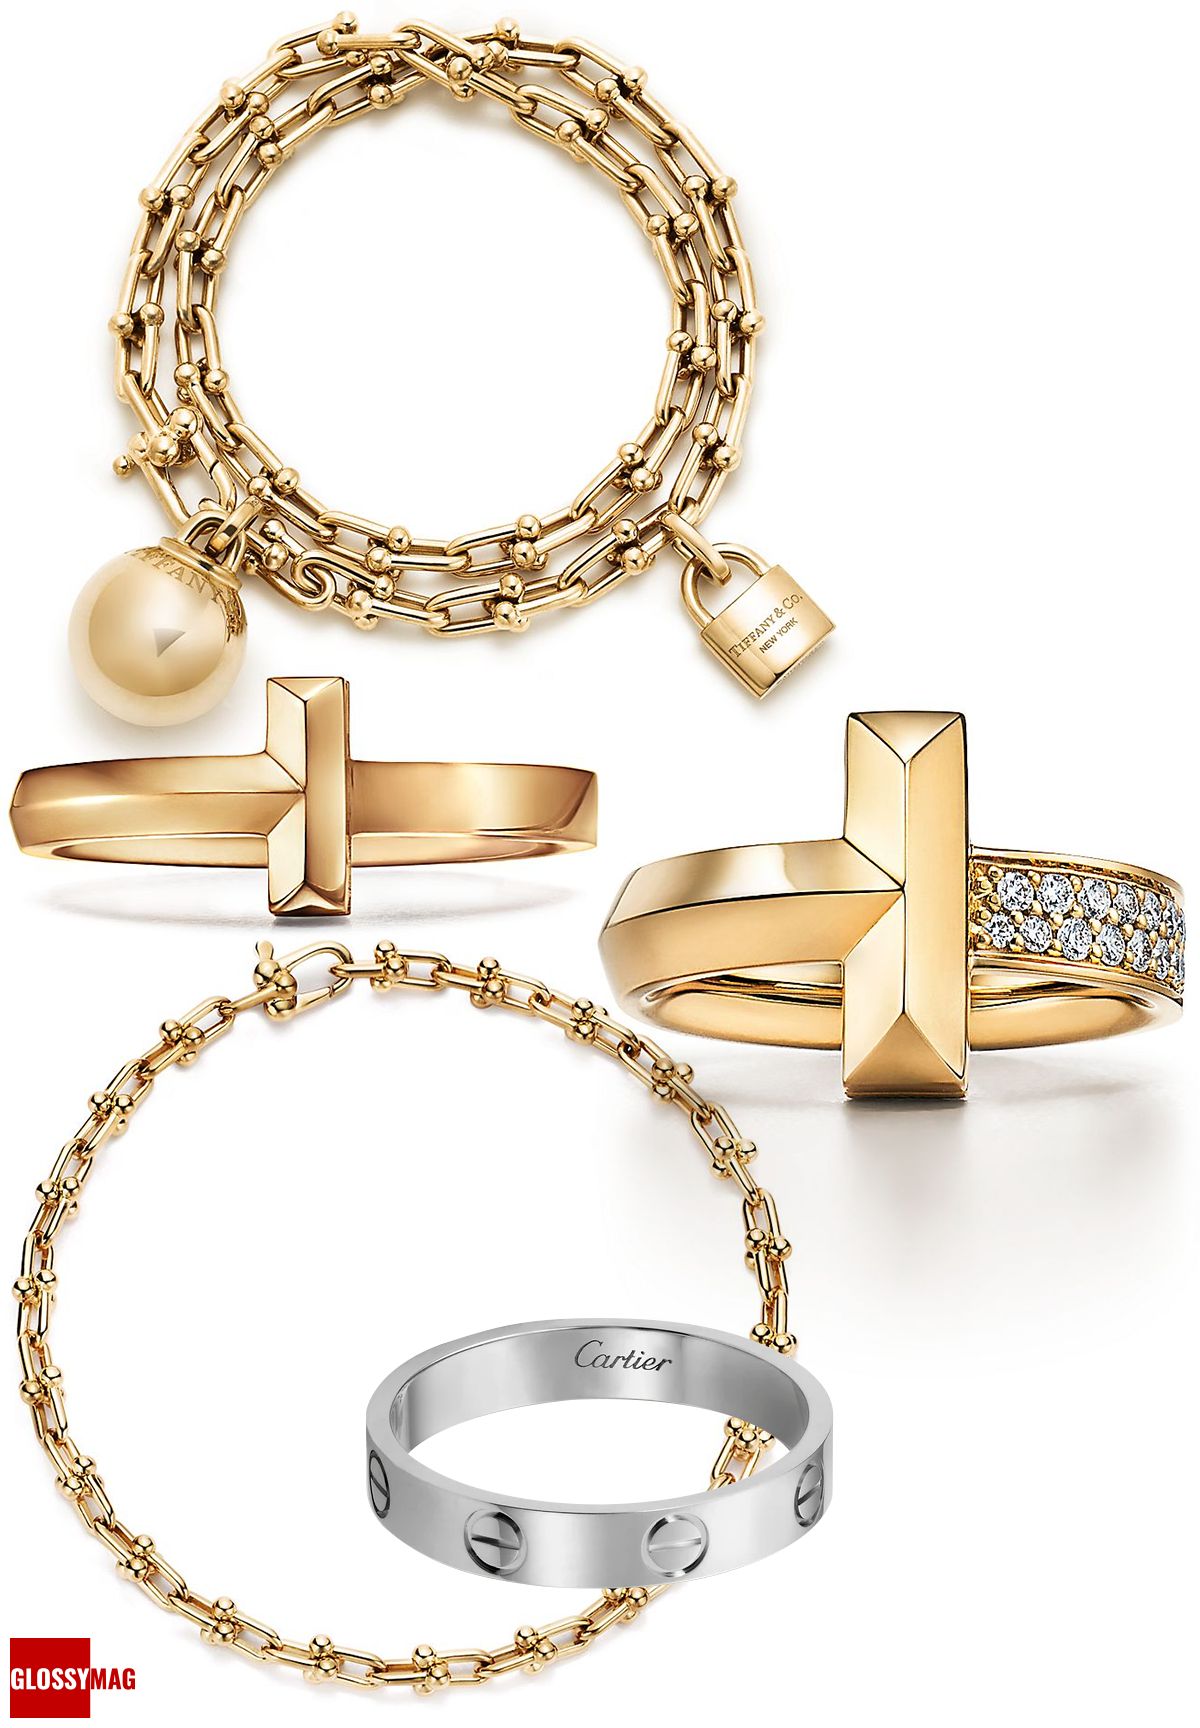 Браслет Tiffany Hardwear из 18-каратного желтого золота; кольцо Tiffany T T1 из 18-каратного золота с бриллиантами; кольцо Tiffany T T1 из 18-каратного золота; кольцо «Love» Cartier